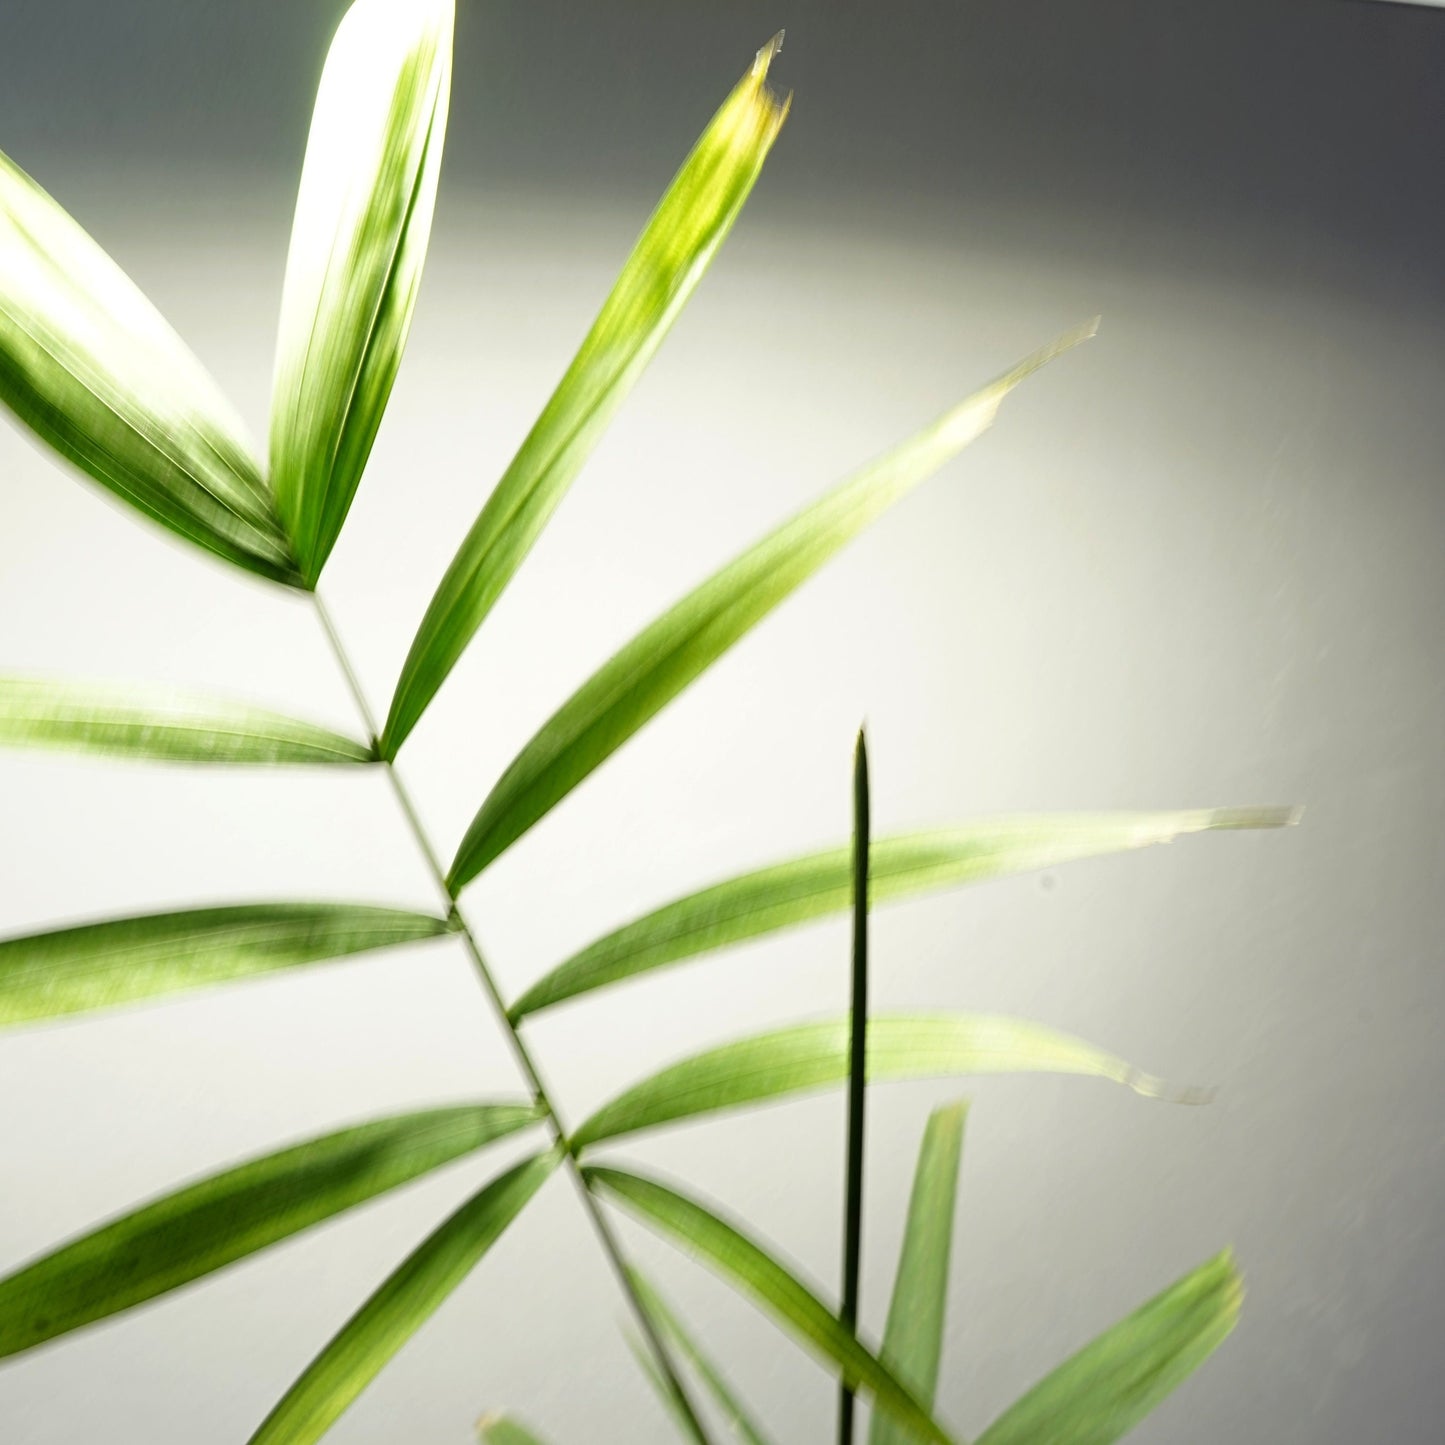 Wodyetia bifurcata, Foxtail Palm, 20cm(4"), Plant, Live Starer, Light frost -2C